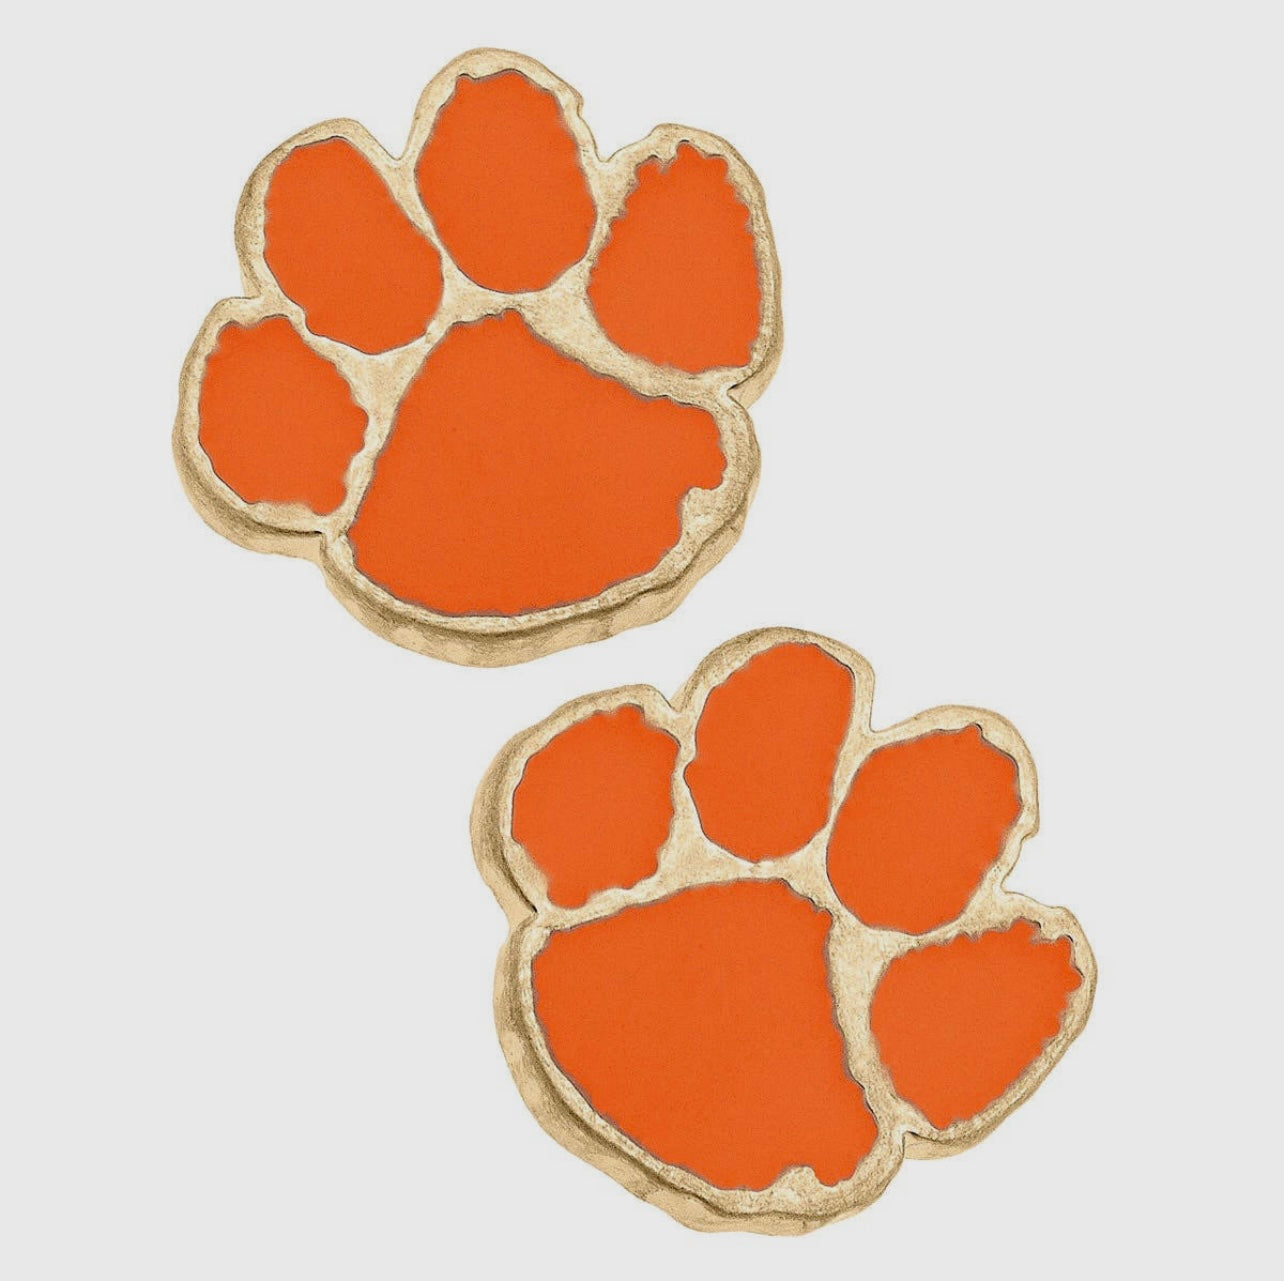 Enamel Collegiate Stud Earrings featuring orange tiger paw for the Clemson University.